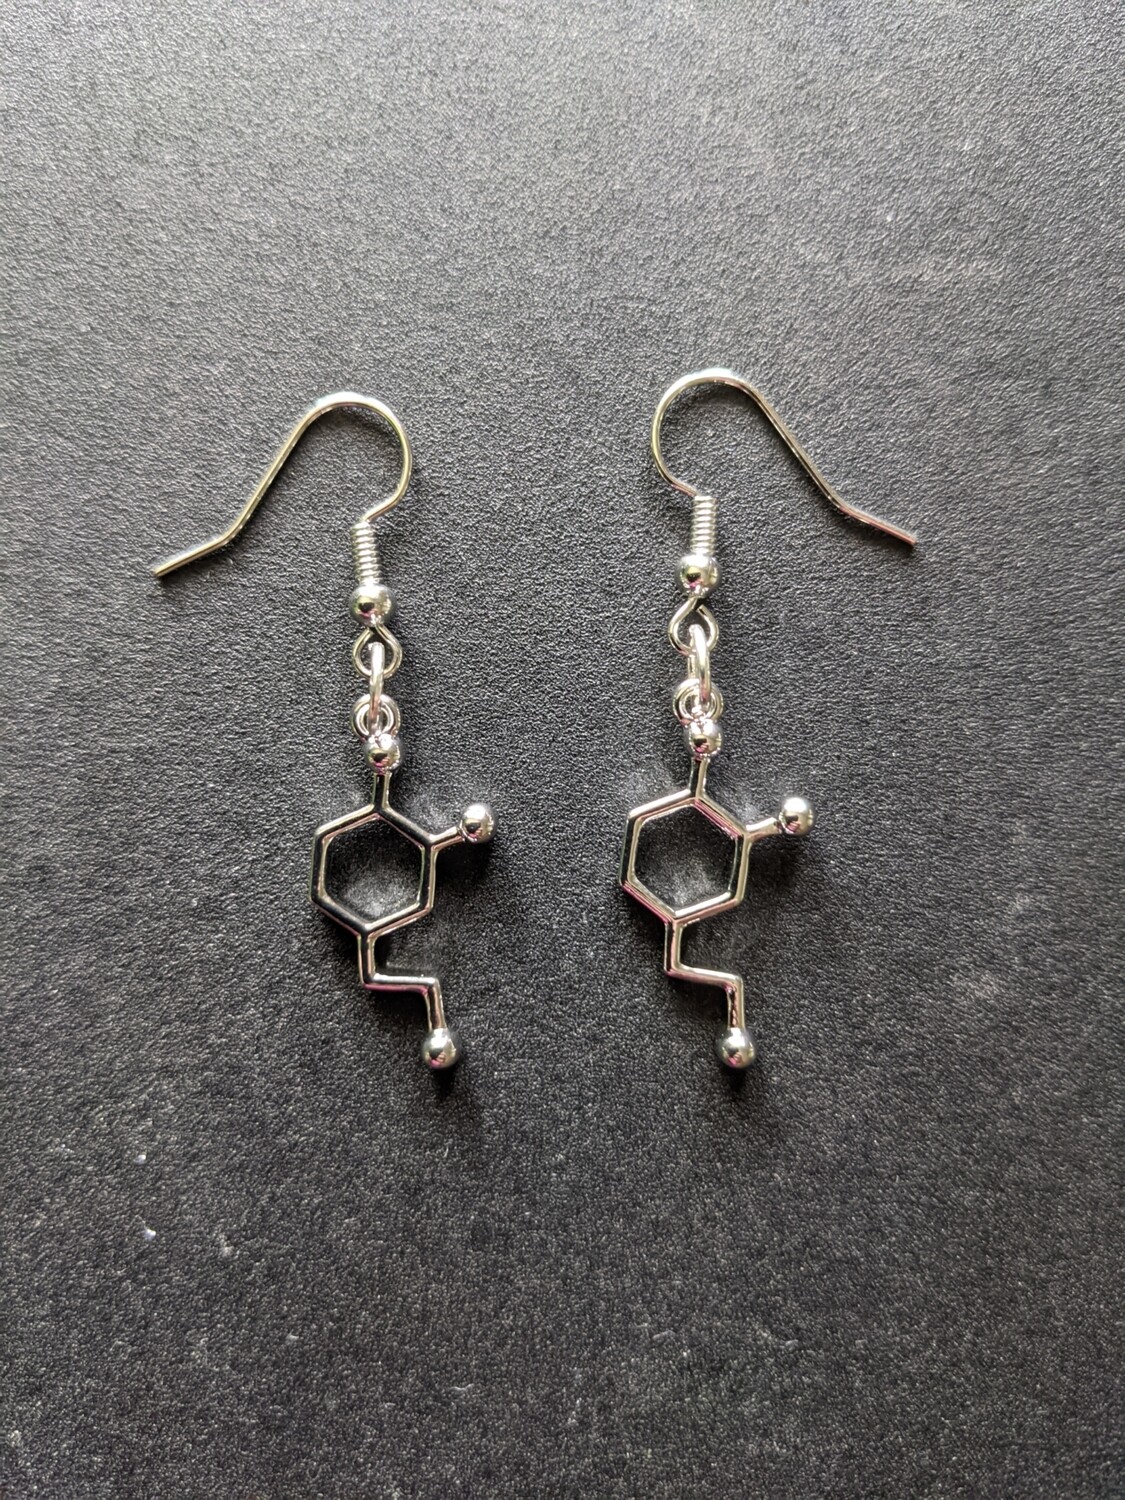 Dopamine earrings